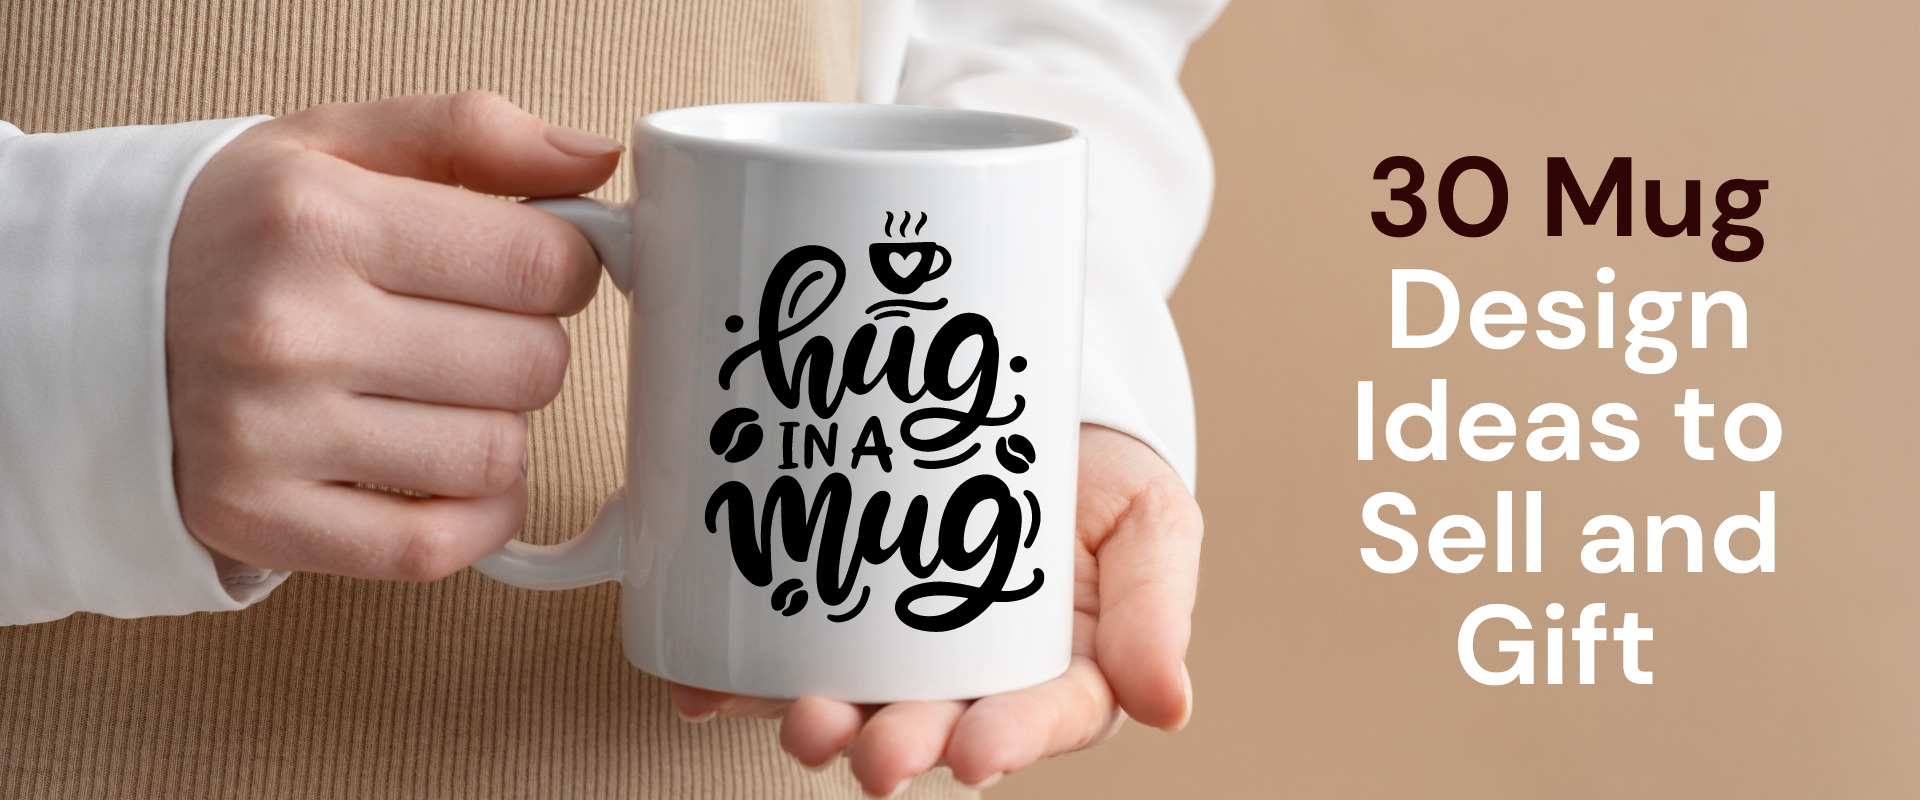 30 Mug Design Ideas to Sell and Gift